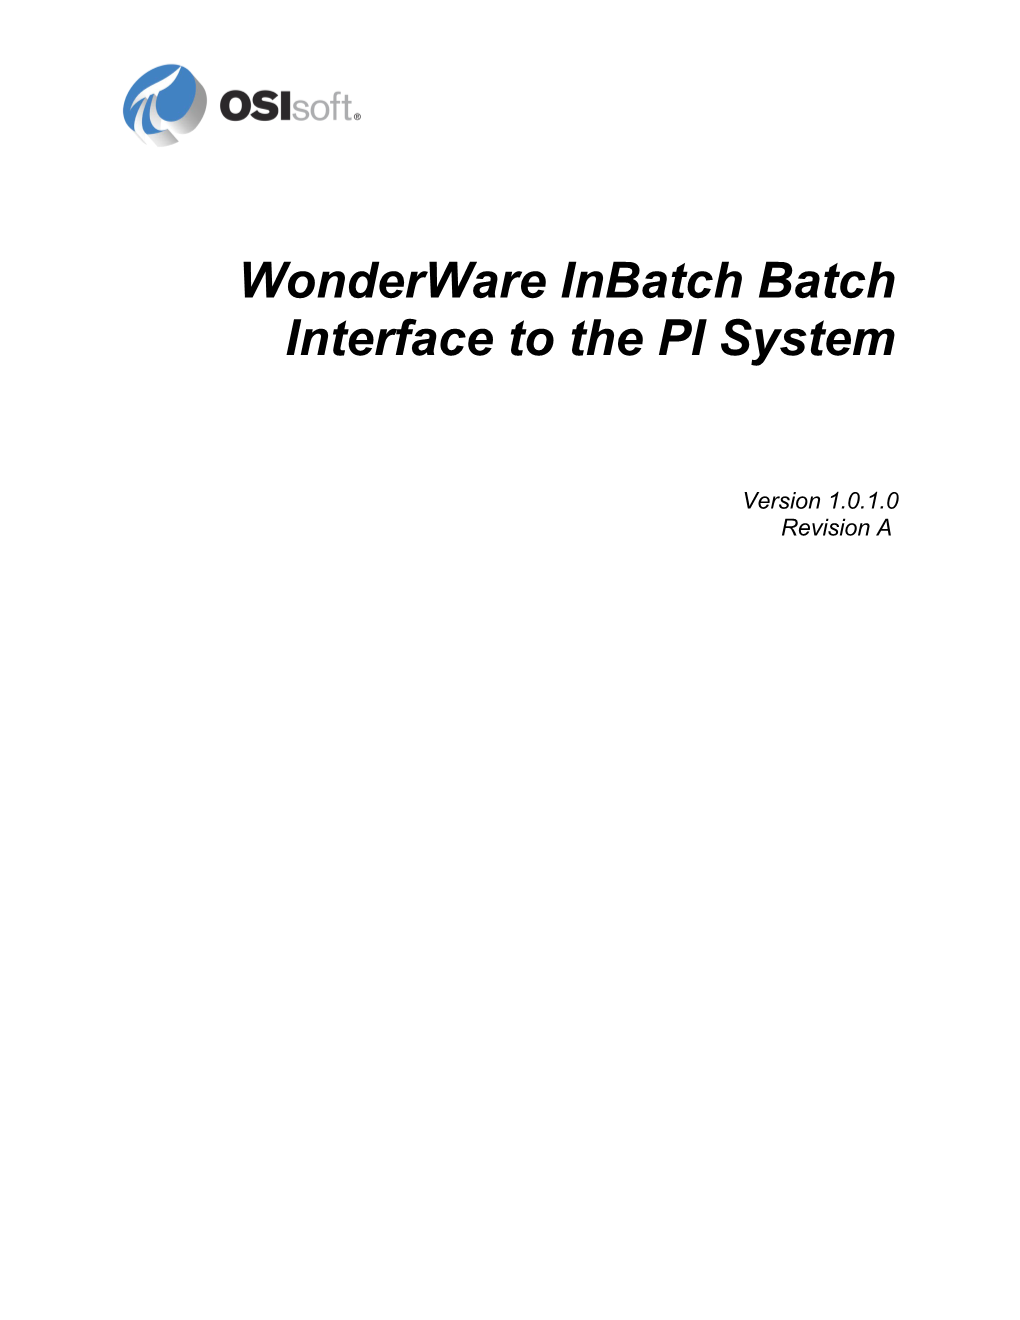 Wonderware Inbatch Batch Interface to the PI System